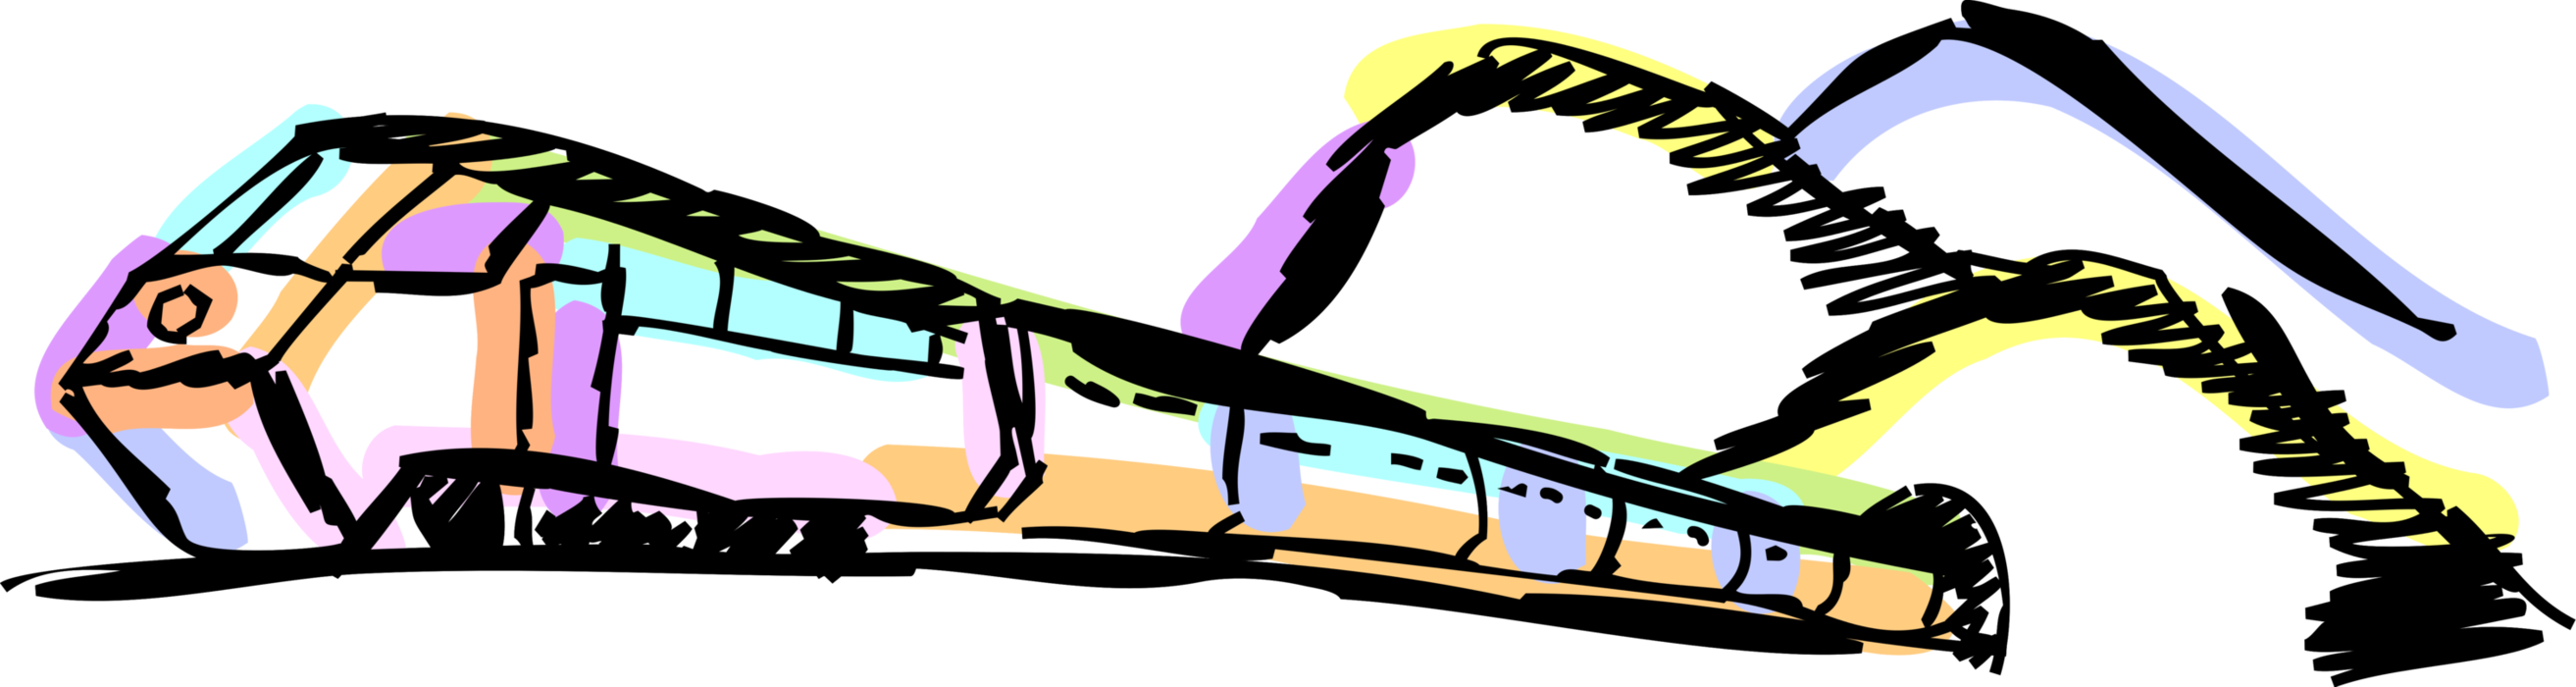 Vector Illustration of Railroad Rail Transport Speeding Locomotive Railway Train Engine Emerges from Mountain Tunnel